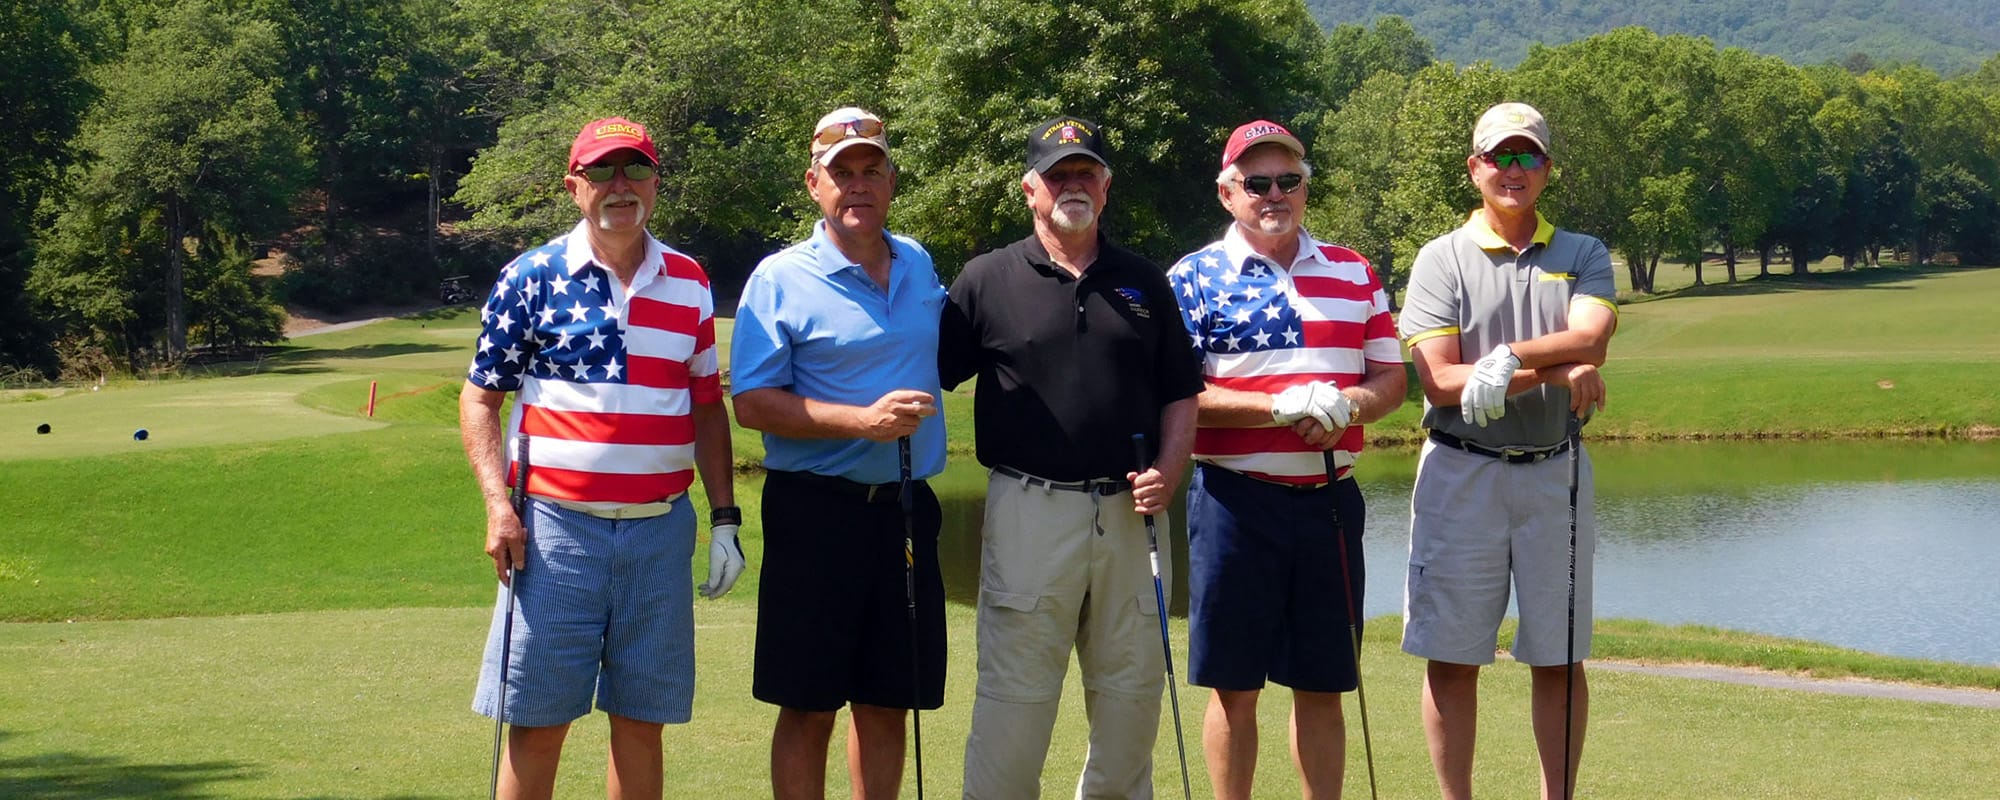 Patriotic golf foursome